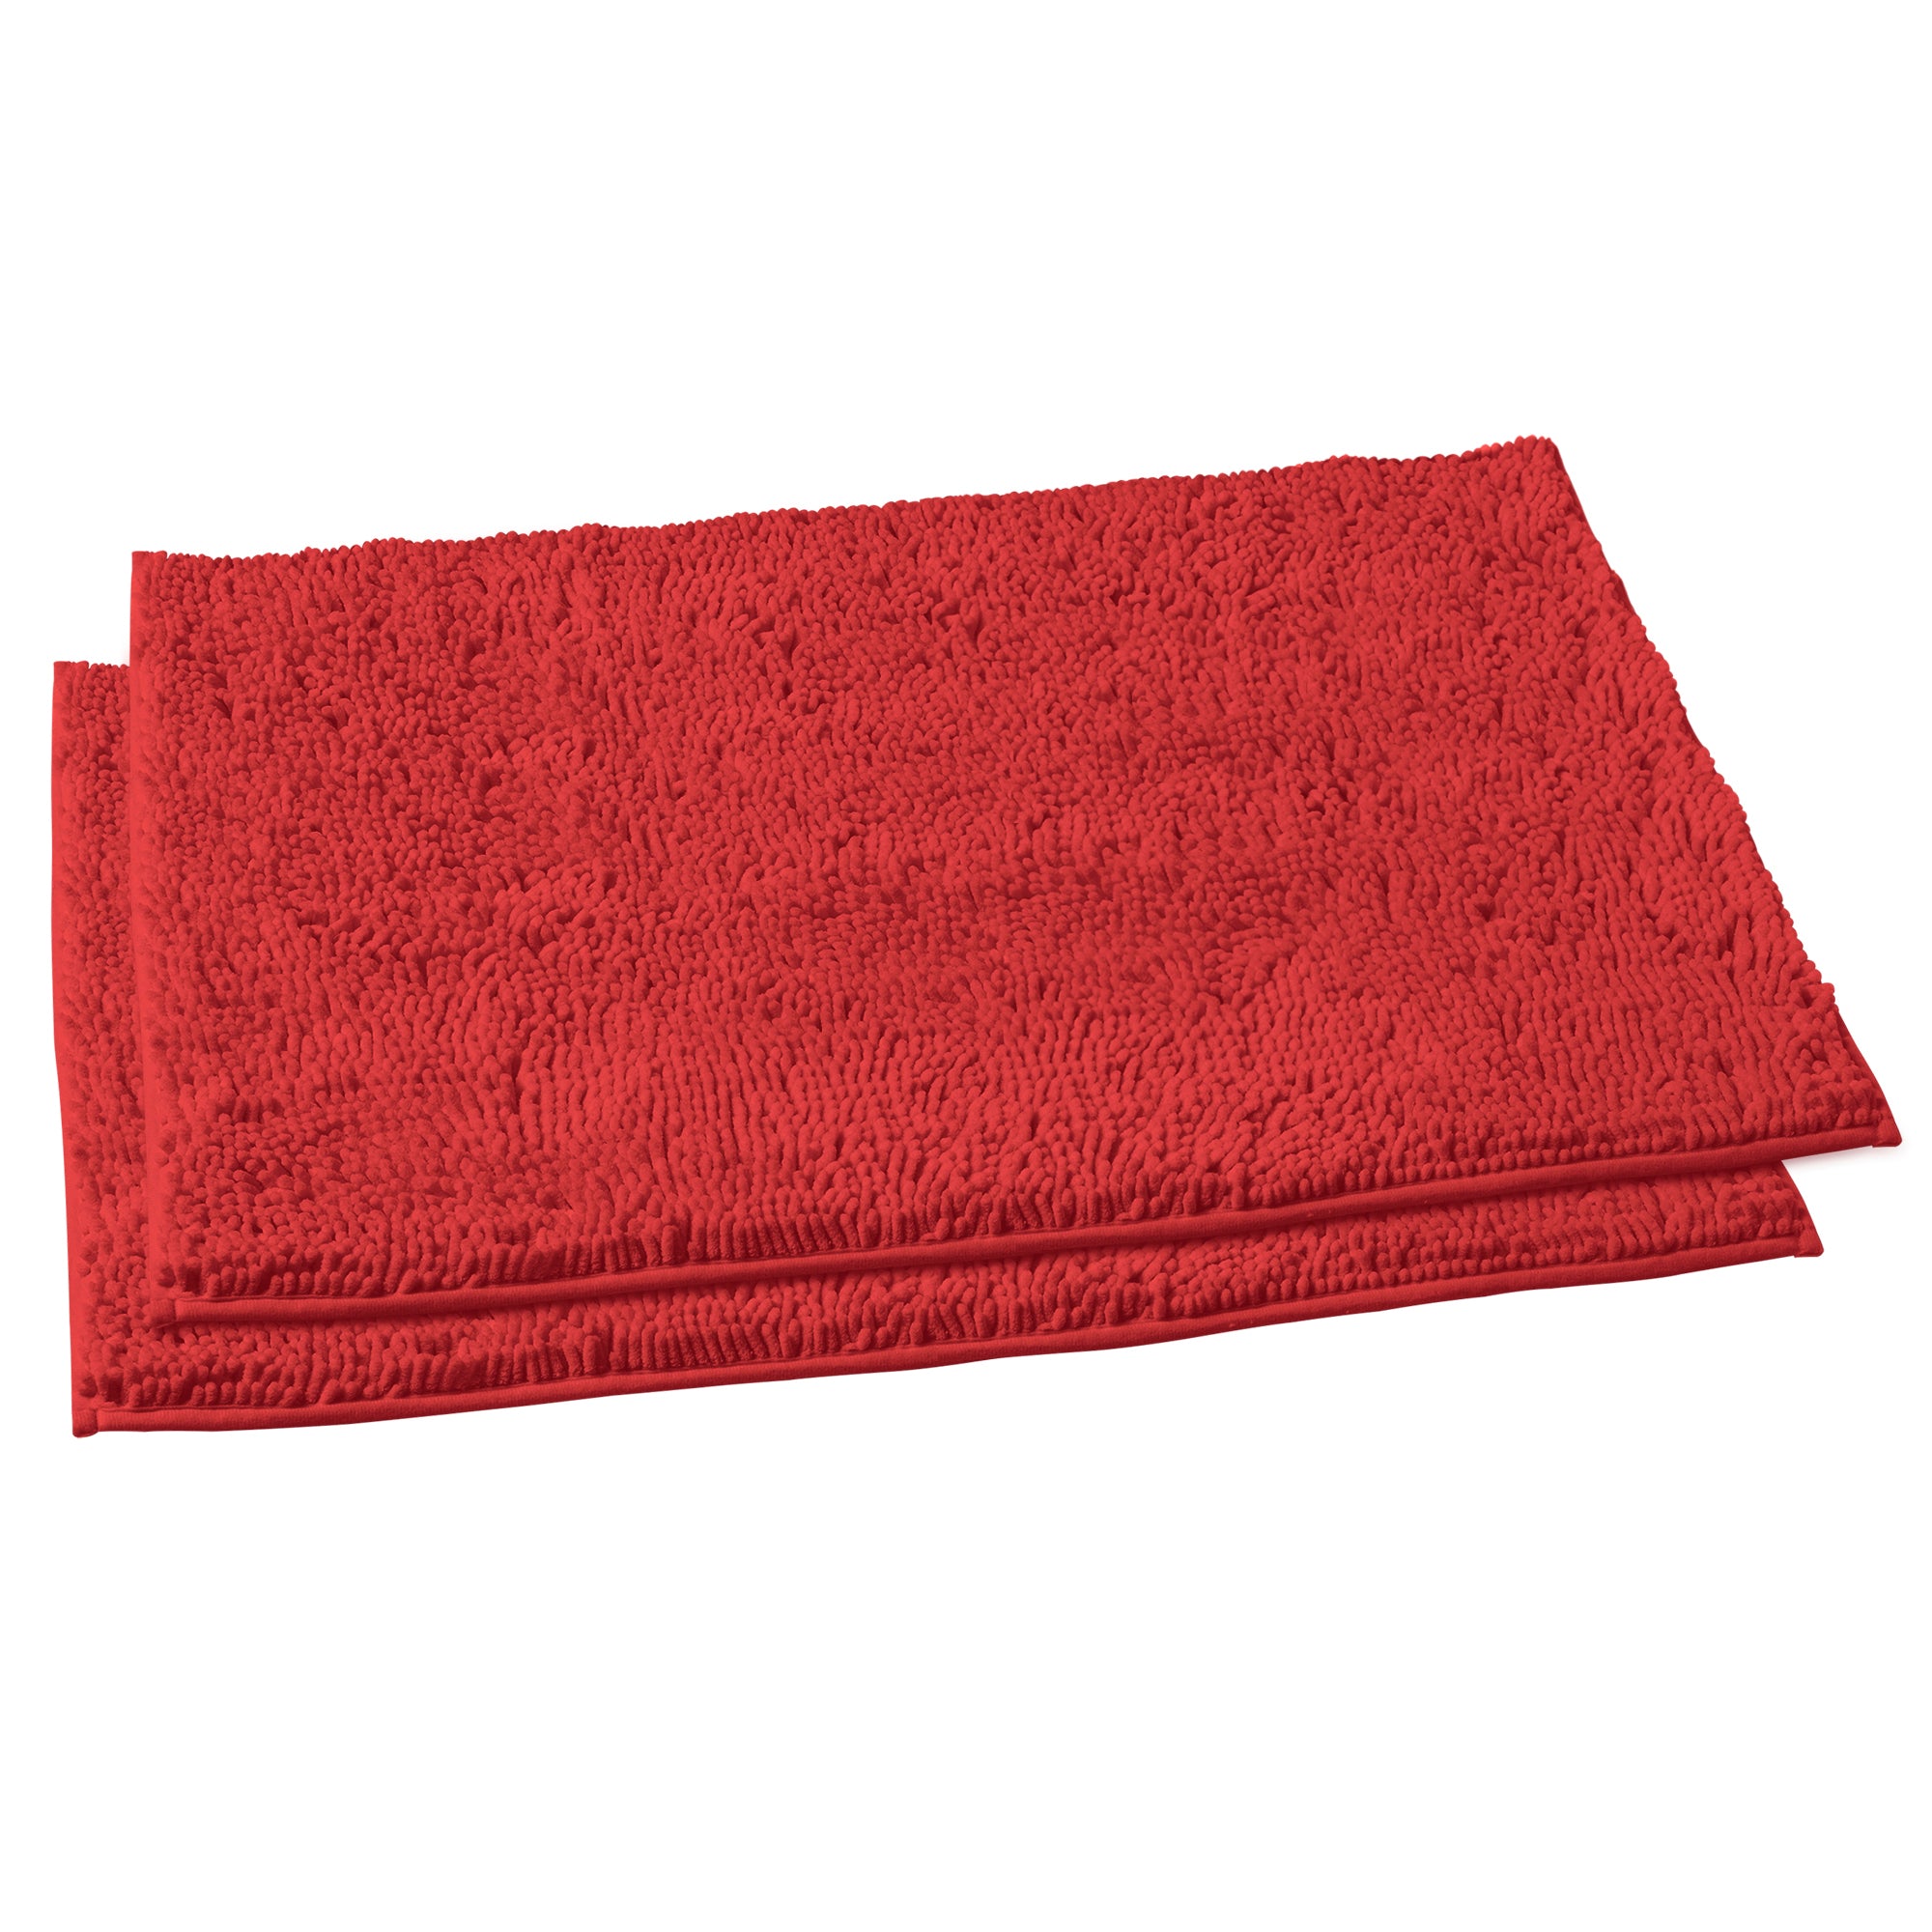 LuxUrux Red Bathroom Rugs Set-Extra-Soft Plush Bath Mat Shower Bathroom Rugs,1'' Chenille Microfiber Material, Super Absorbent (Rectangular Set, Red)